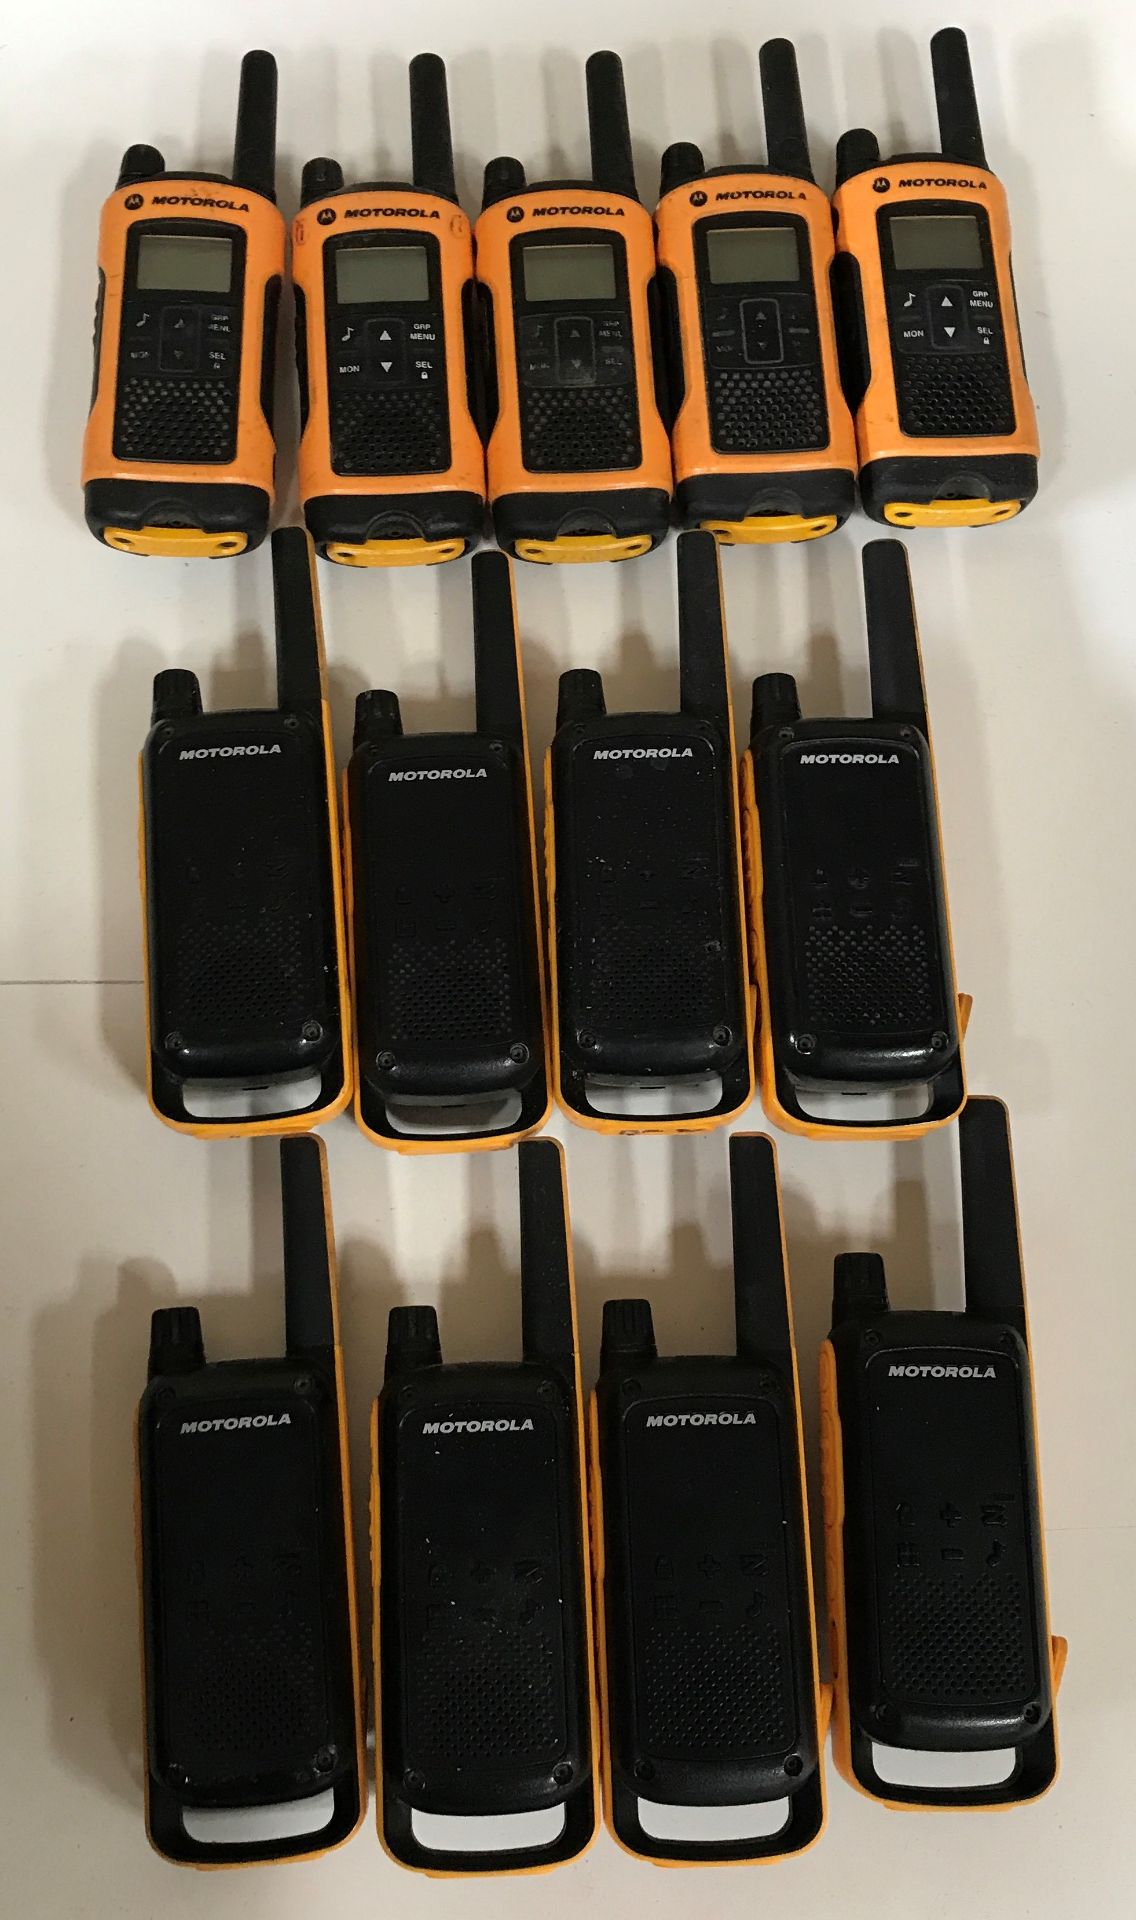 15 Motorola Walkie Talkies Comprising; Box of T82 Extreme Walkie Talkies, 8 Talkabout & 5 TLKR